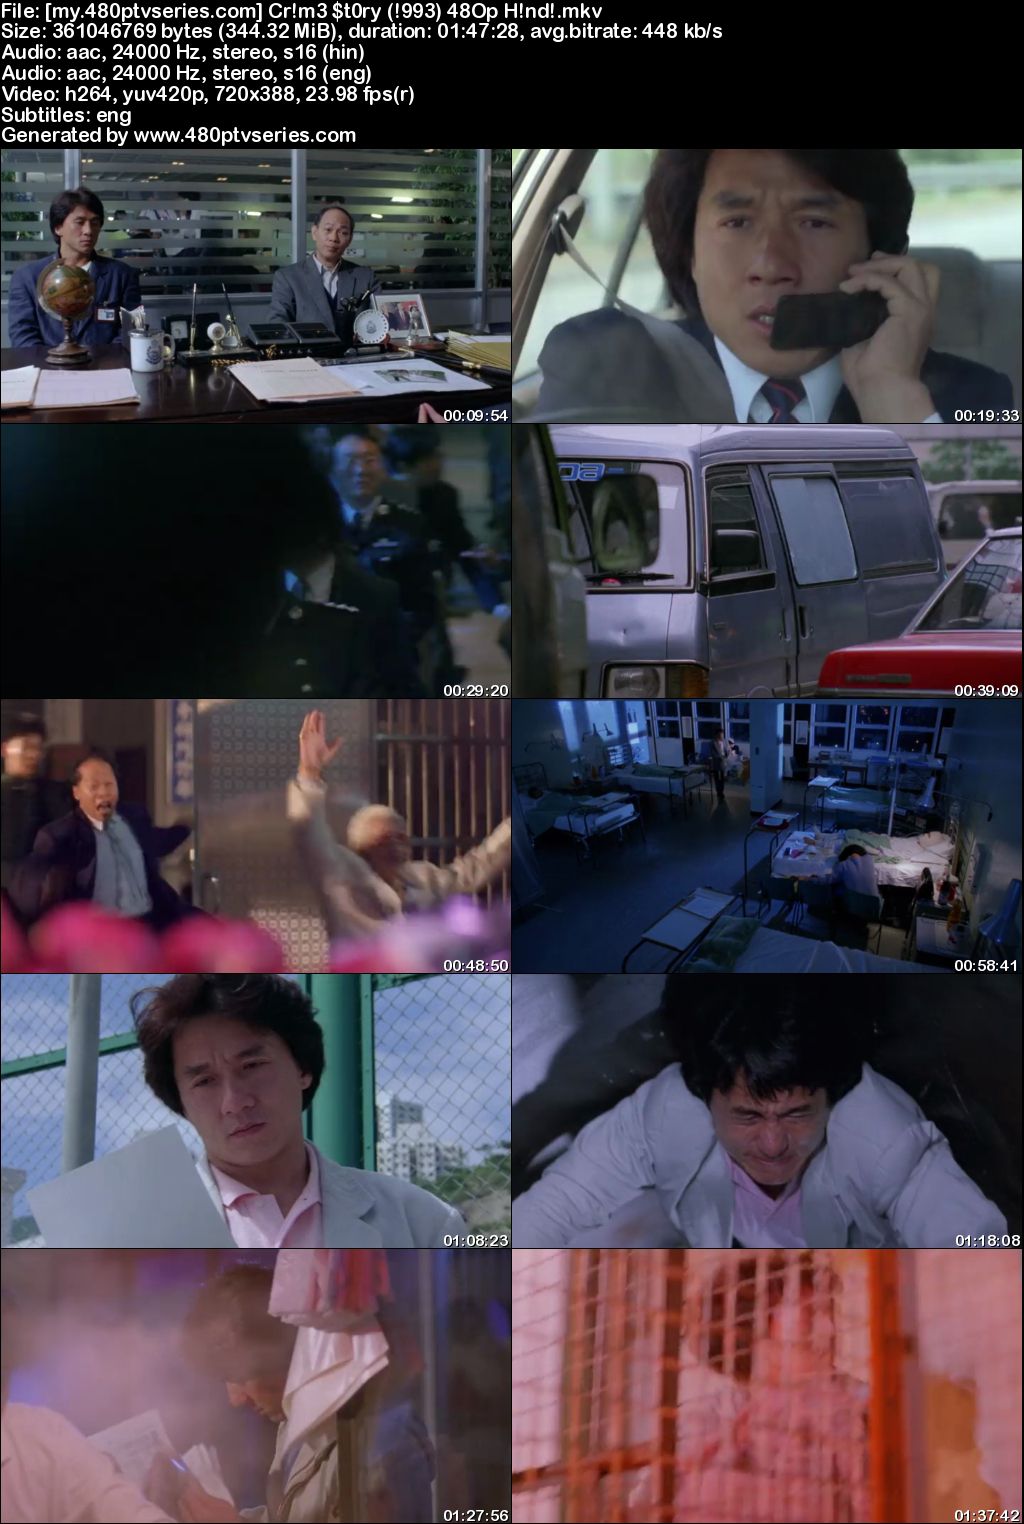 Crime Story (1993) 350MB Full Hindi Dual Audio Movie Download 480p Bluray Free Watch Online Full Movie Download Worldfree4u 9xmovies